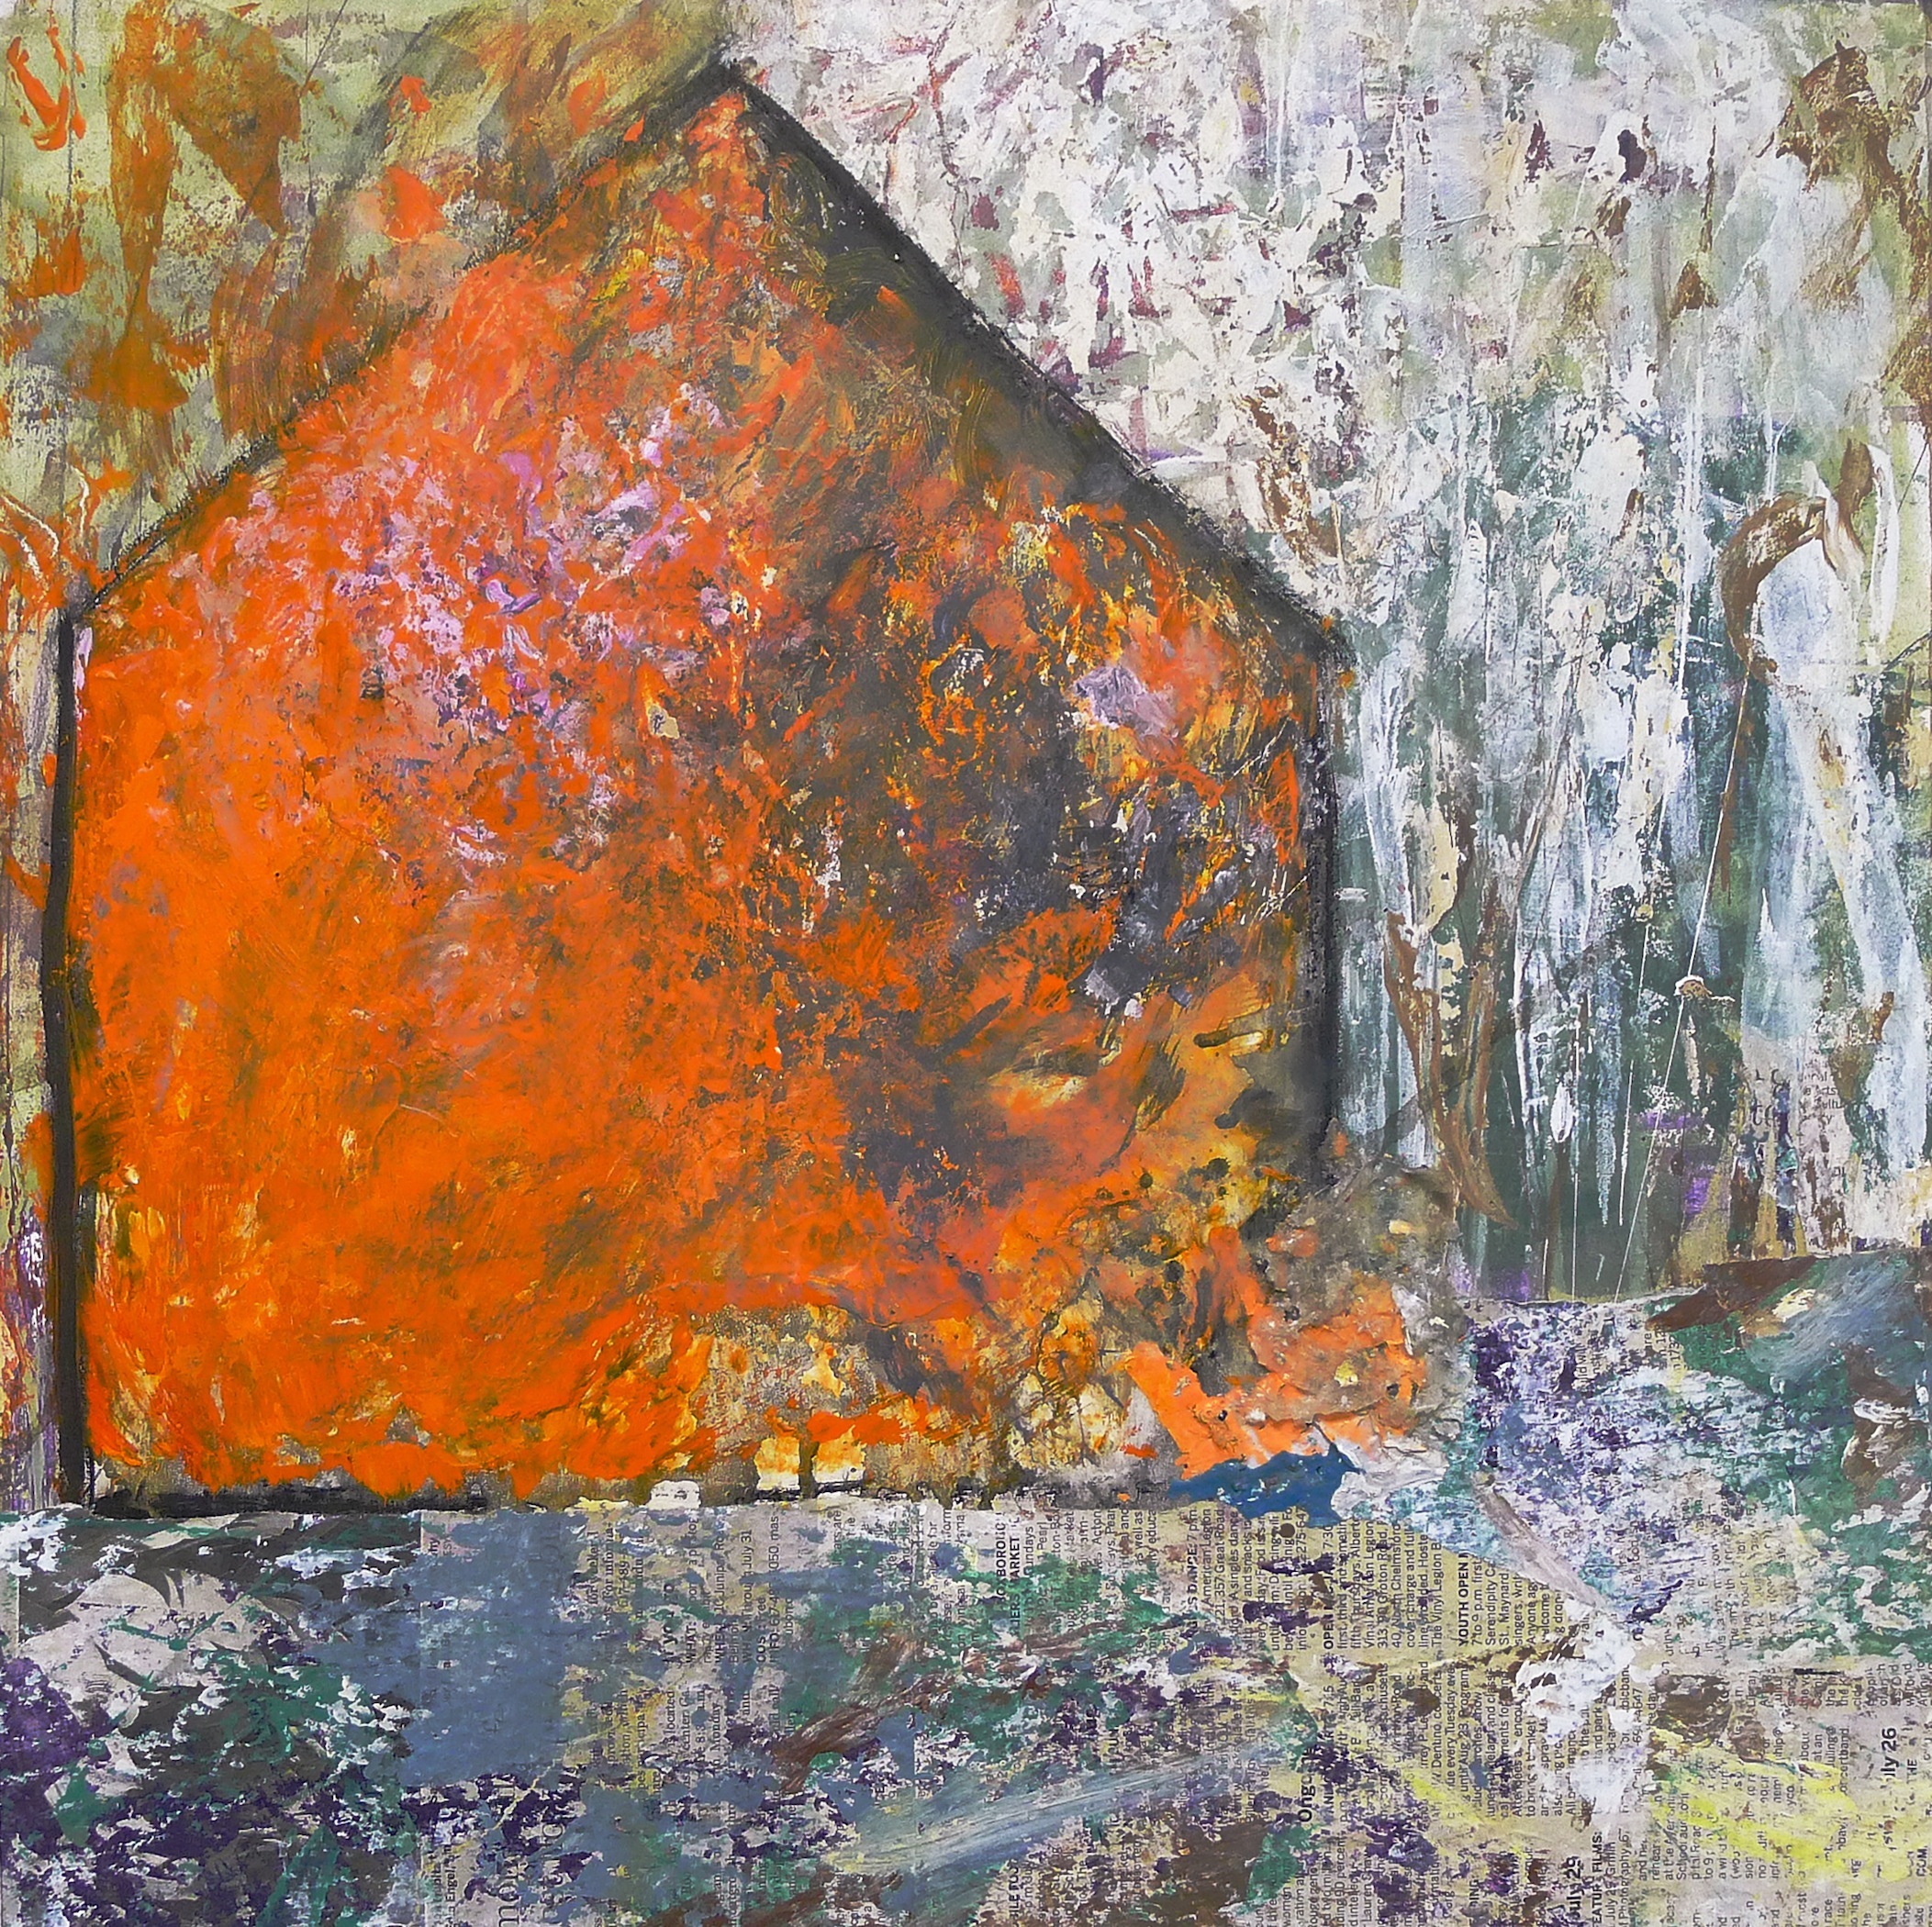  Brenda Cirioni,  Barn Series: Cover,  Mixed media painting, 20x20 